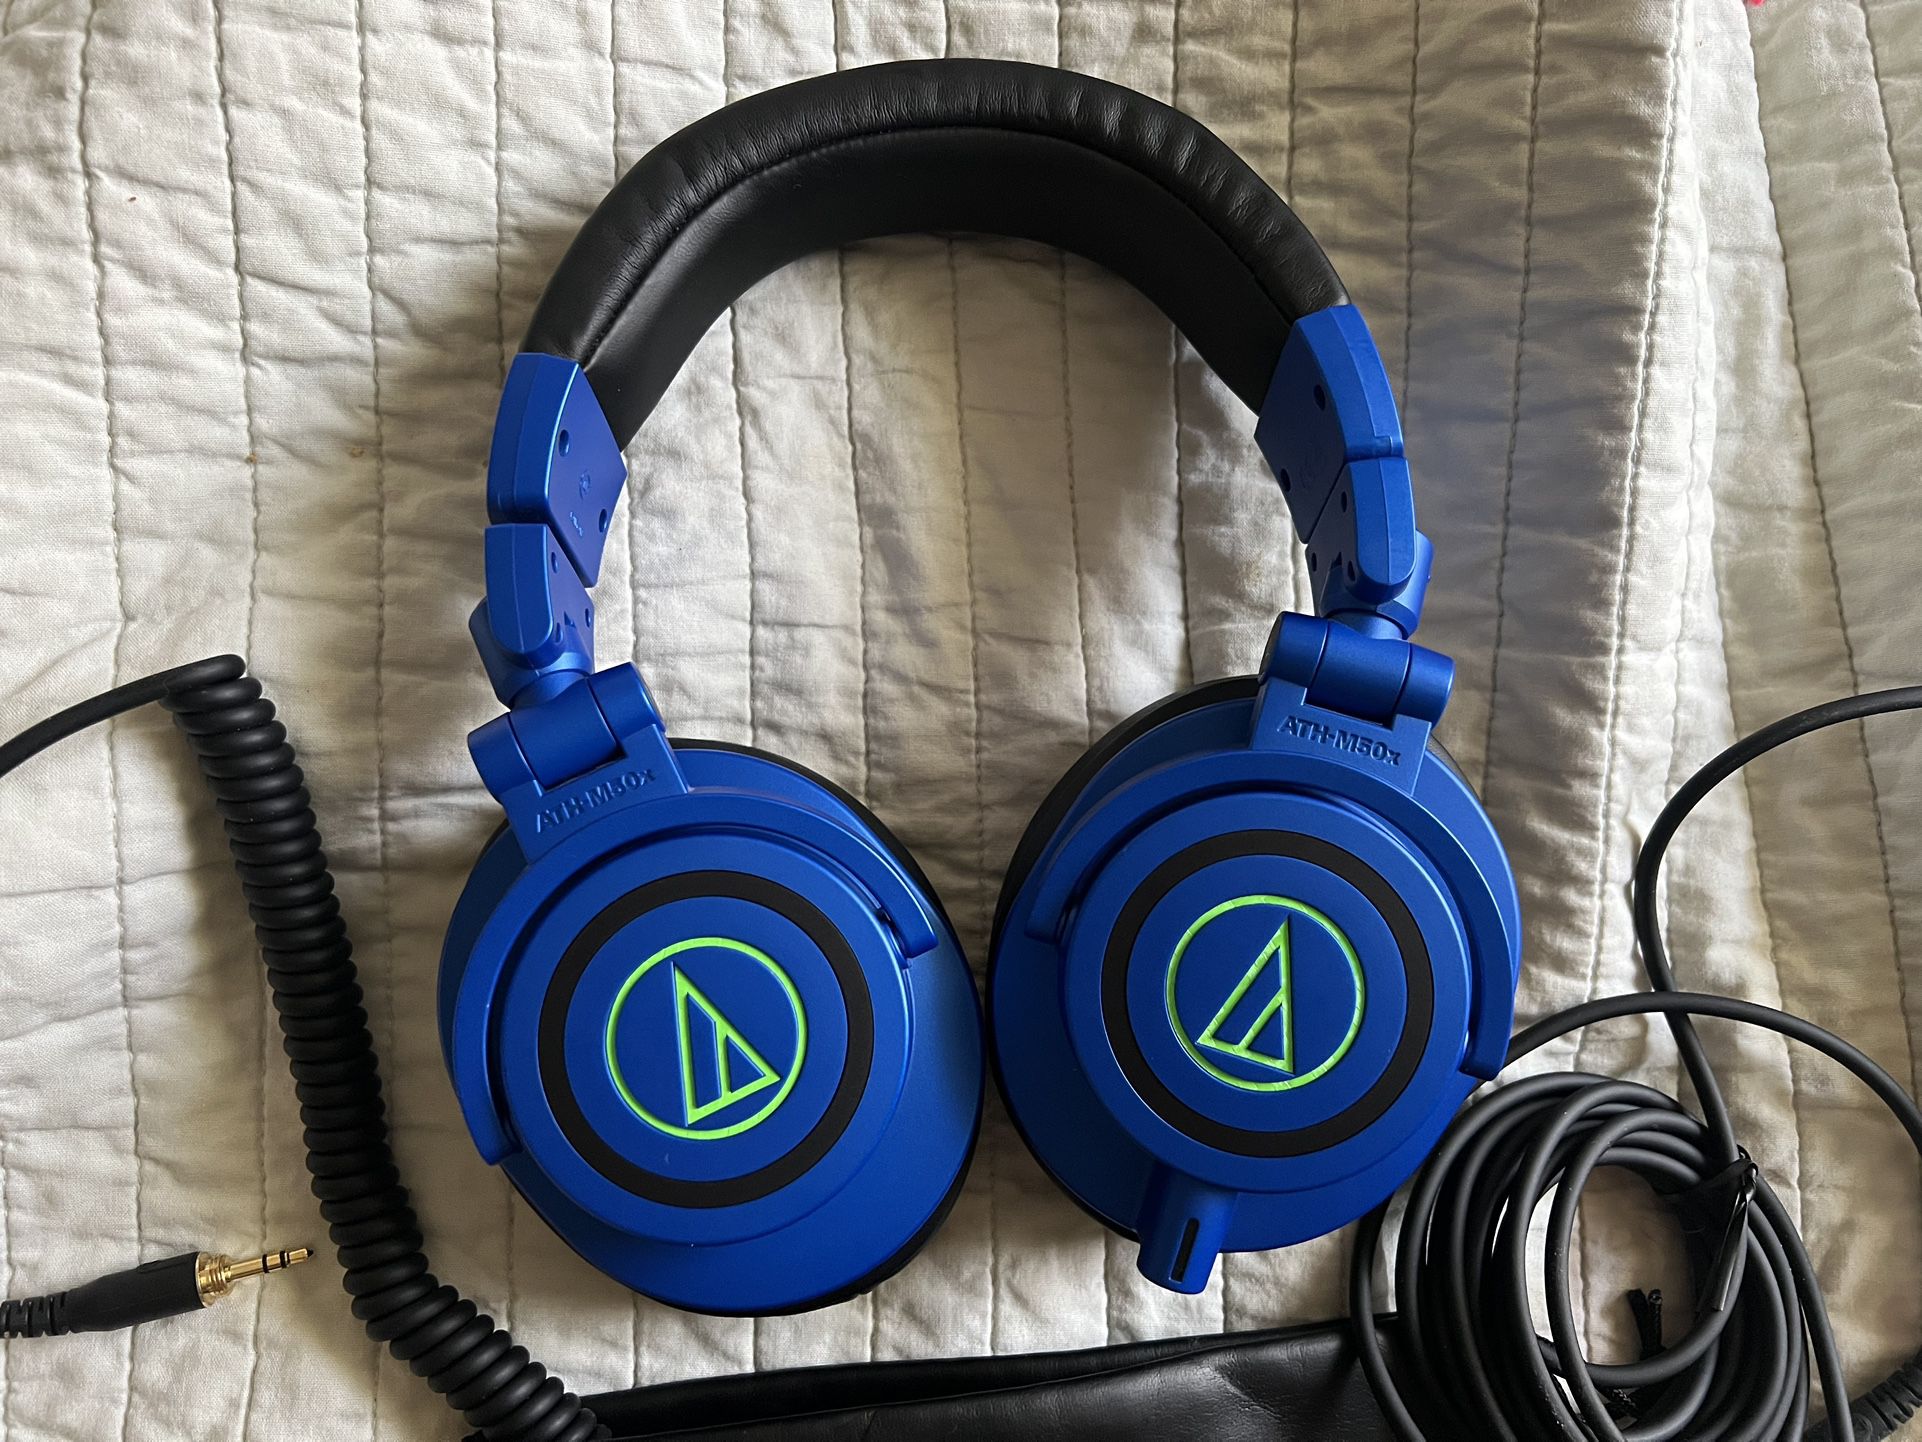 Audio Technica Ath M50x headphones Limited edition Blue Black